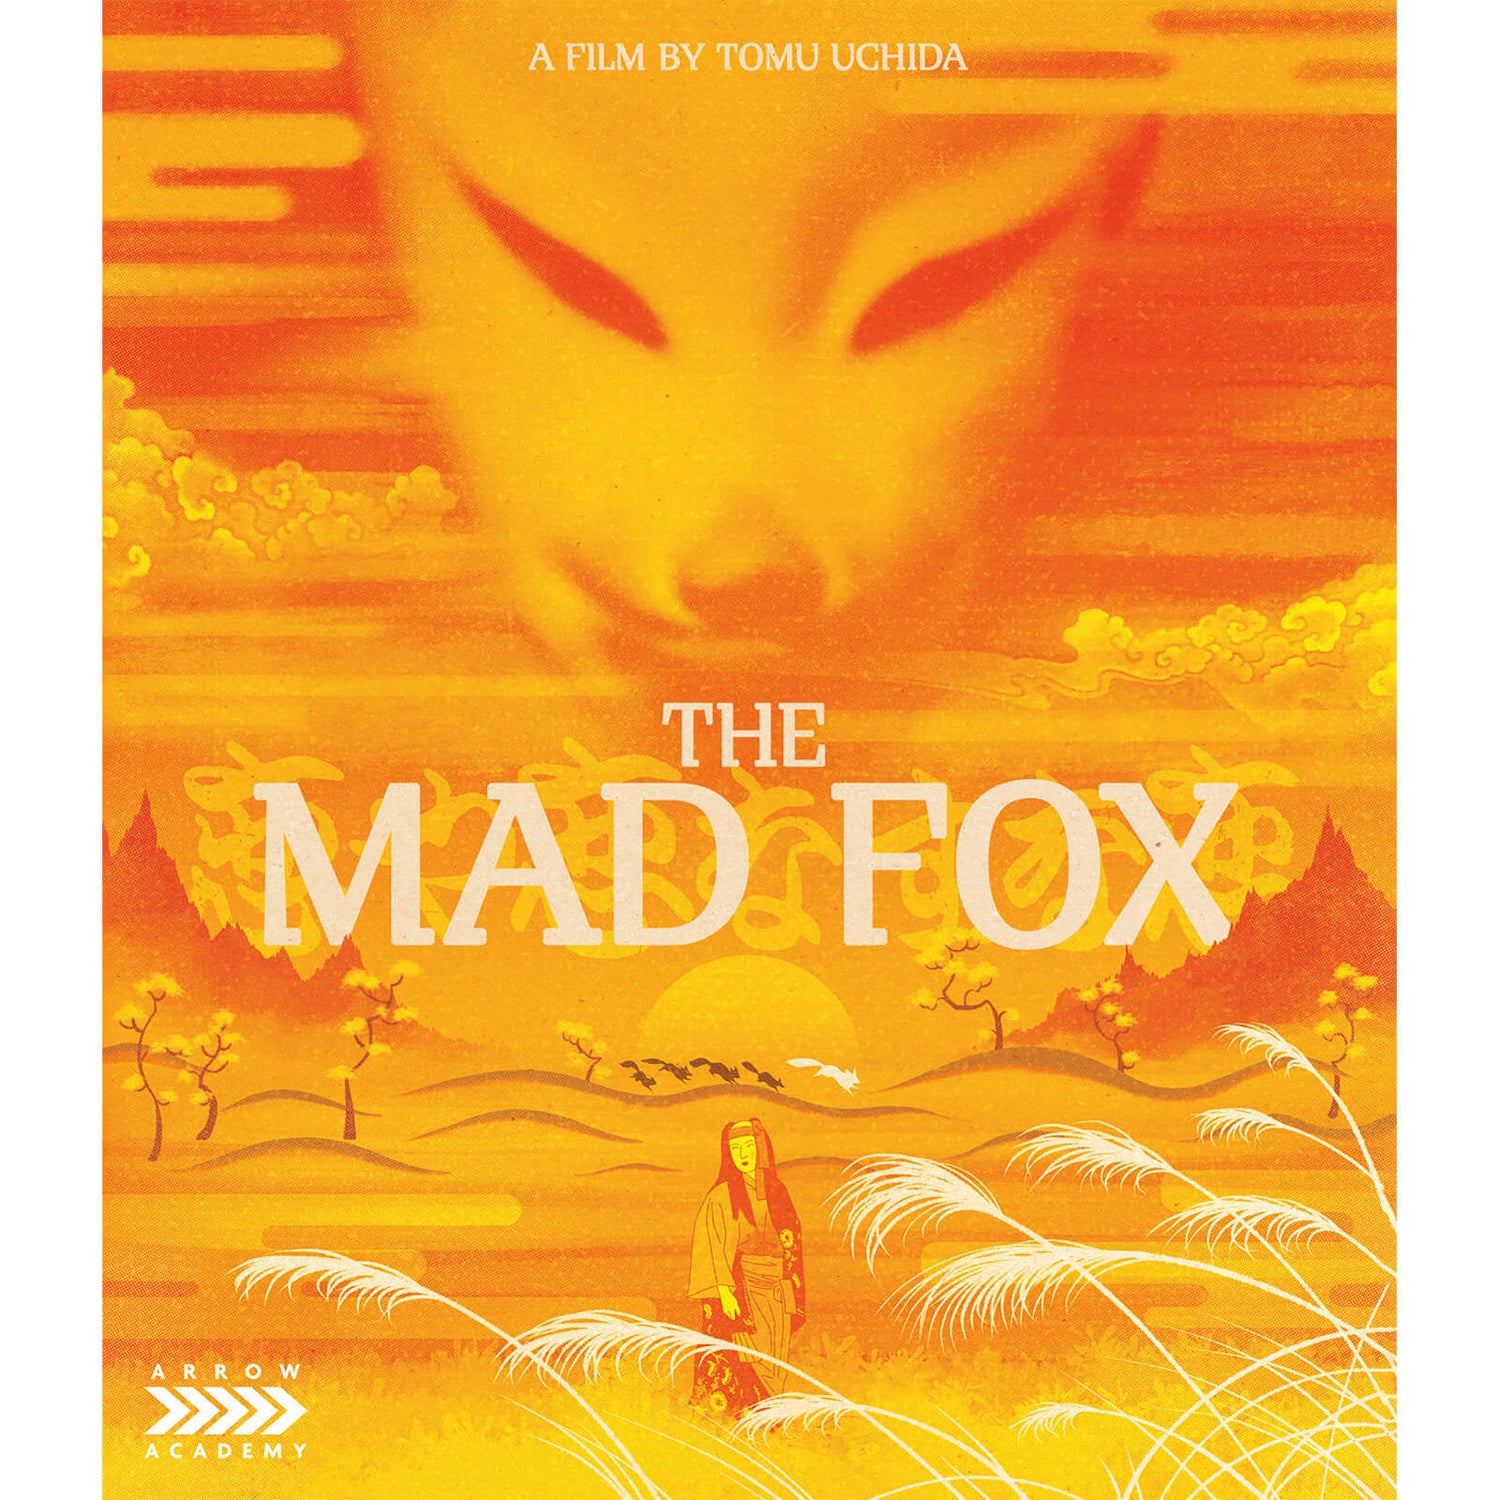 The Mad Fox